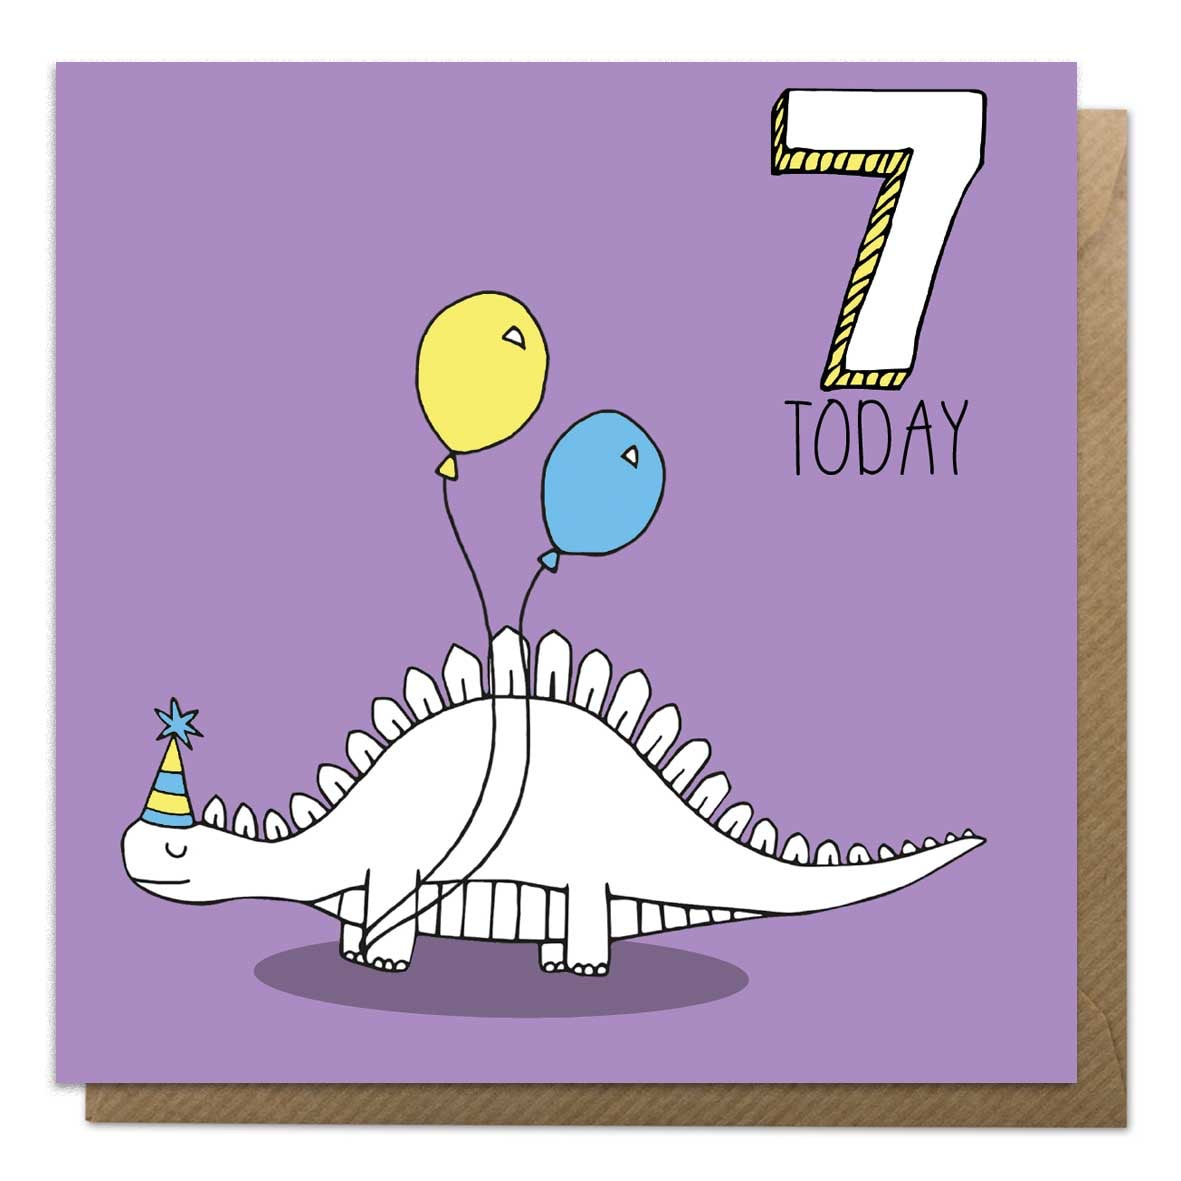 7th Birthday Card - Stegosaurus Dinosaur Card - Neon Magpie